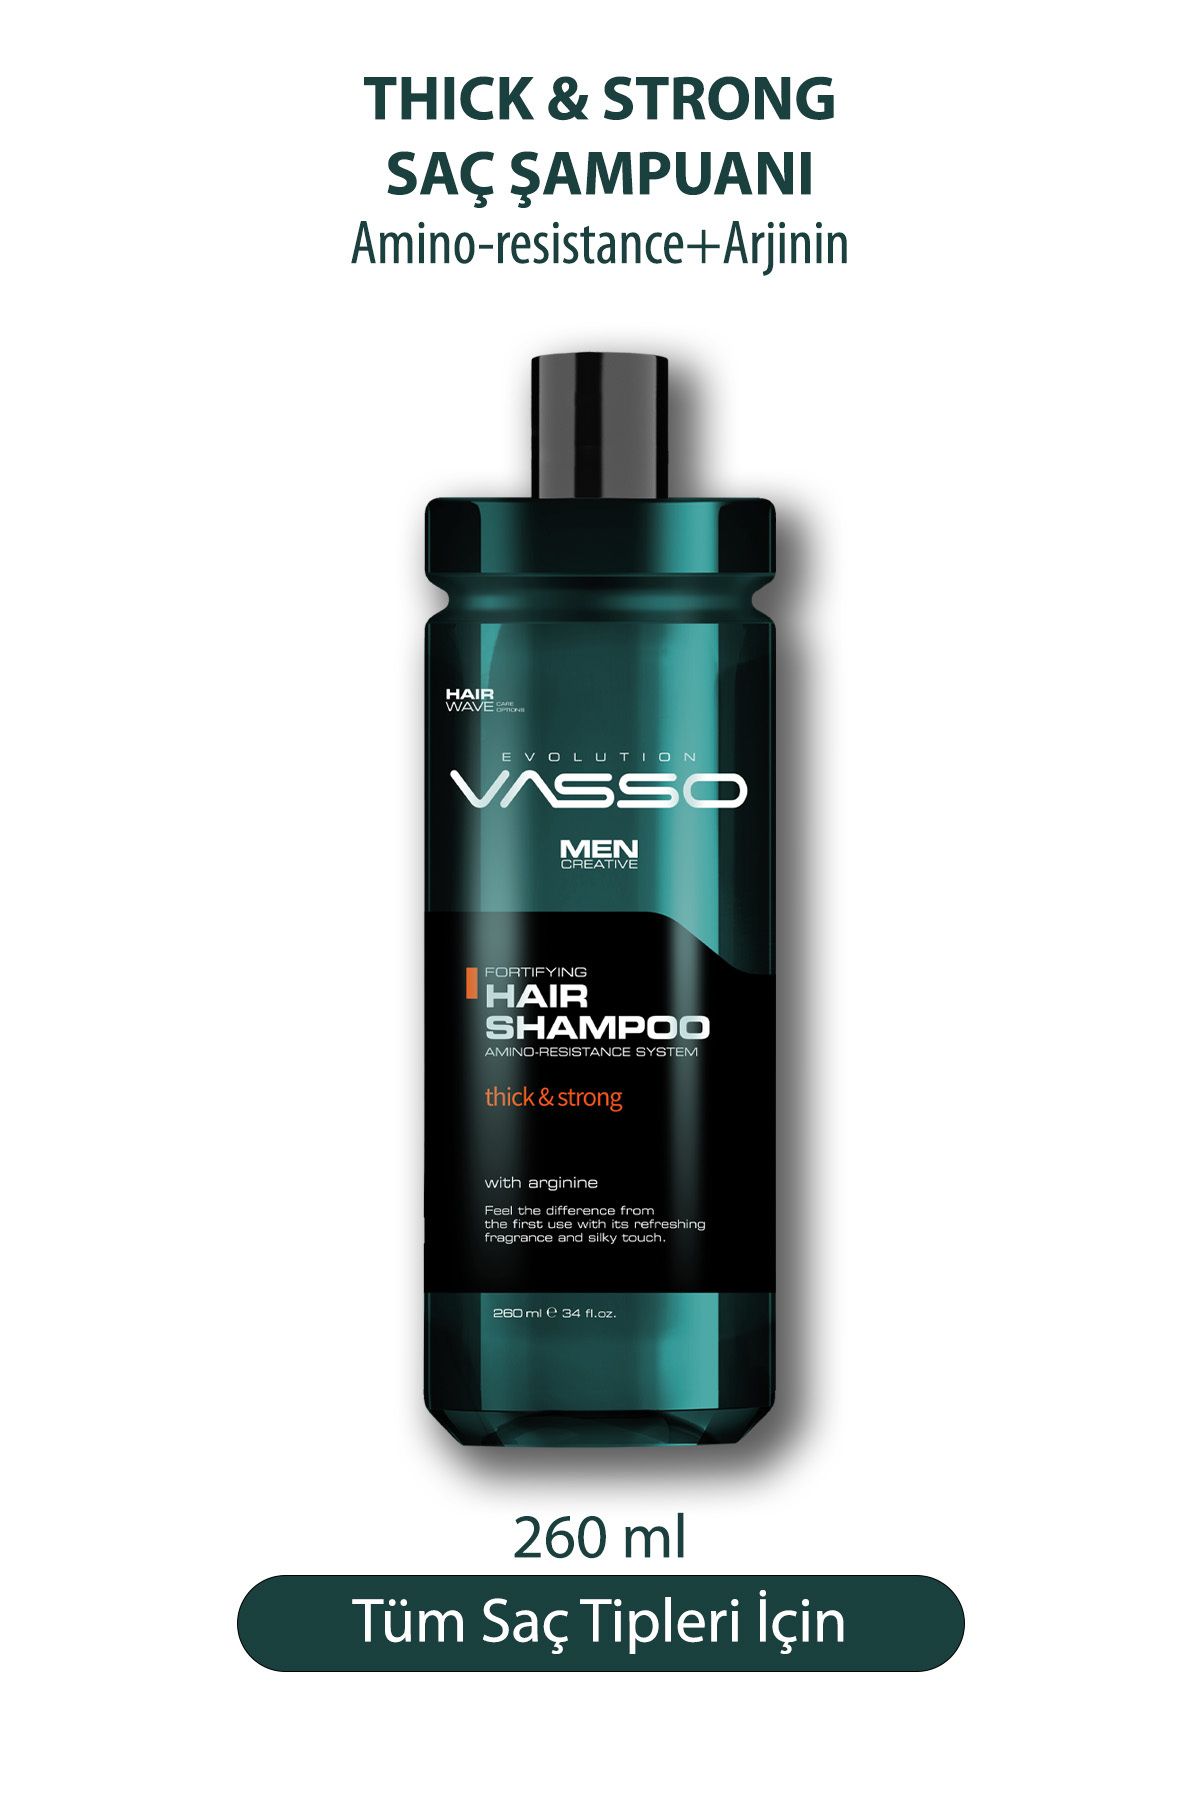 Vasso Men Vasso Hair Sampoo Thick & Strong Saç Şampuanı 260 Ml